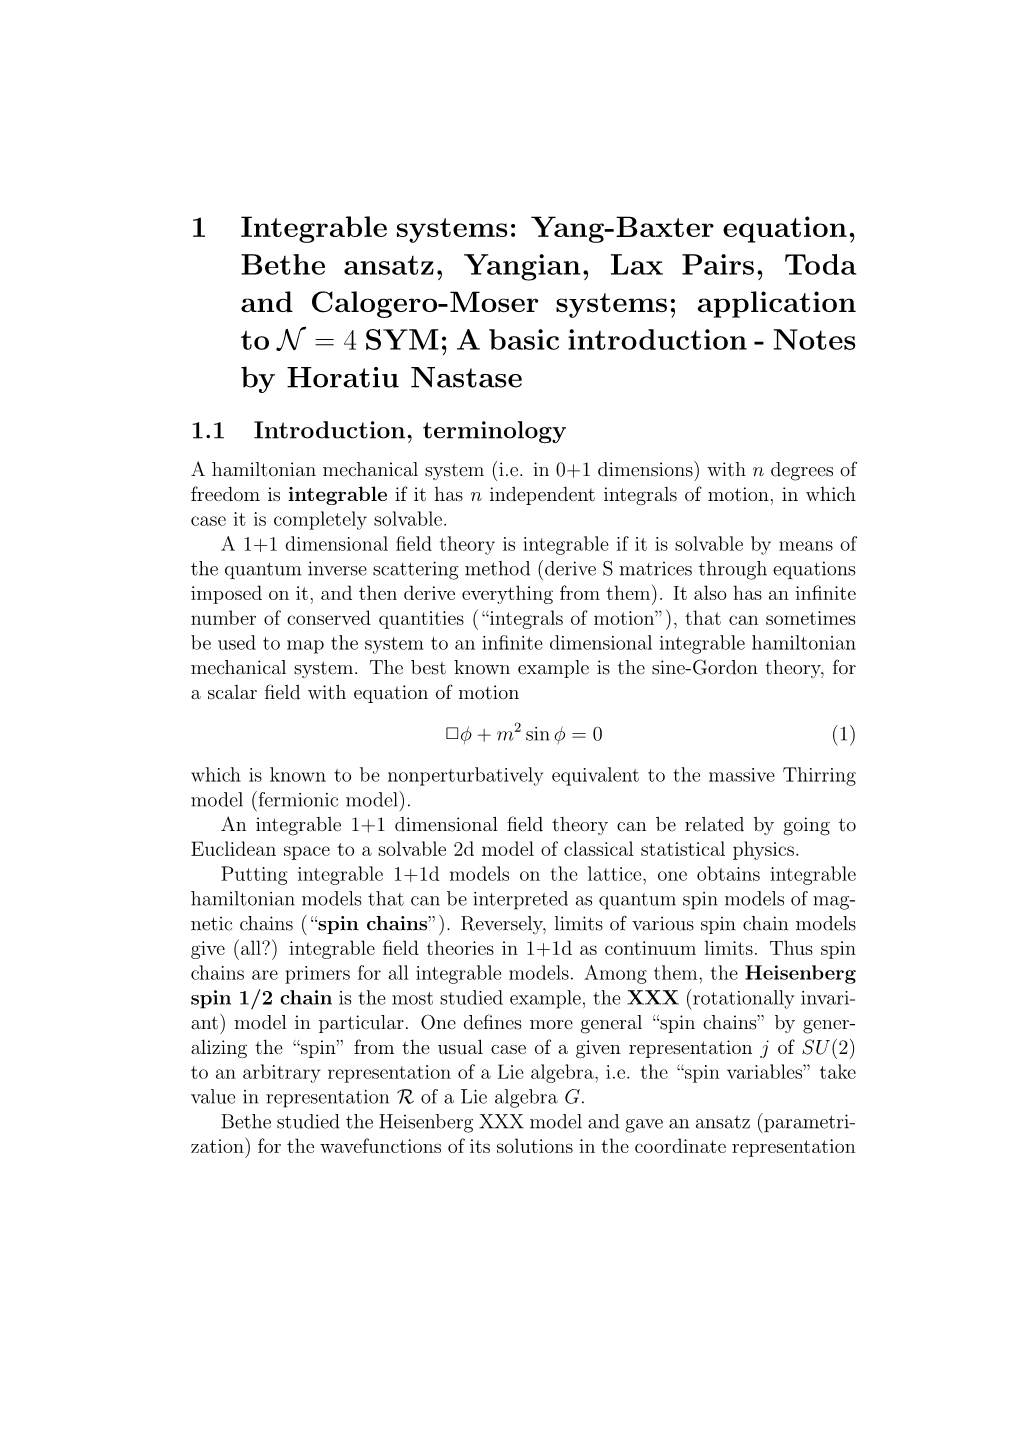 1 Integrable Systems: Yang-Baxter Equation, Bethe Ansatz, Yangian